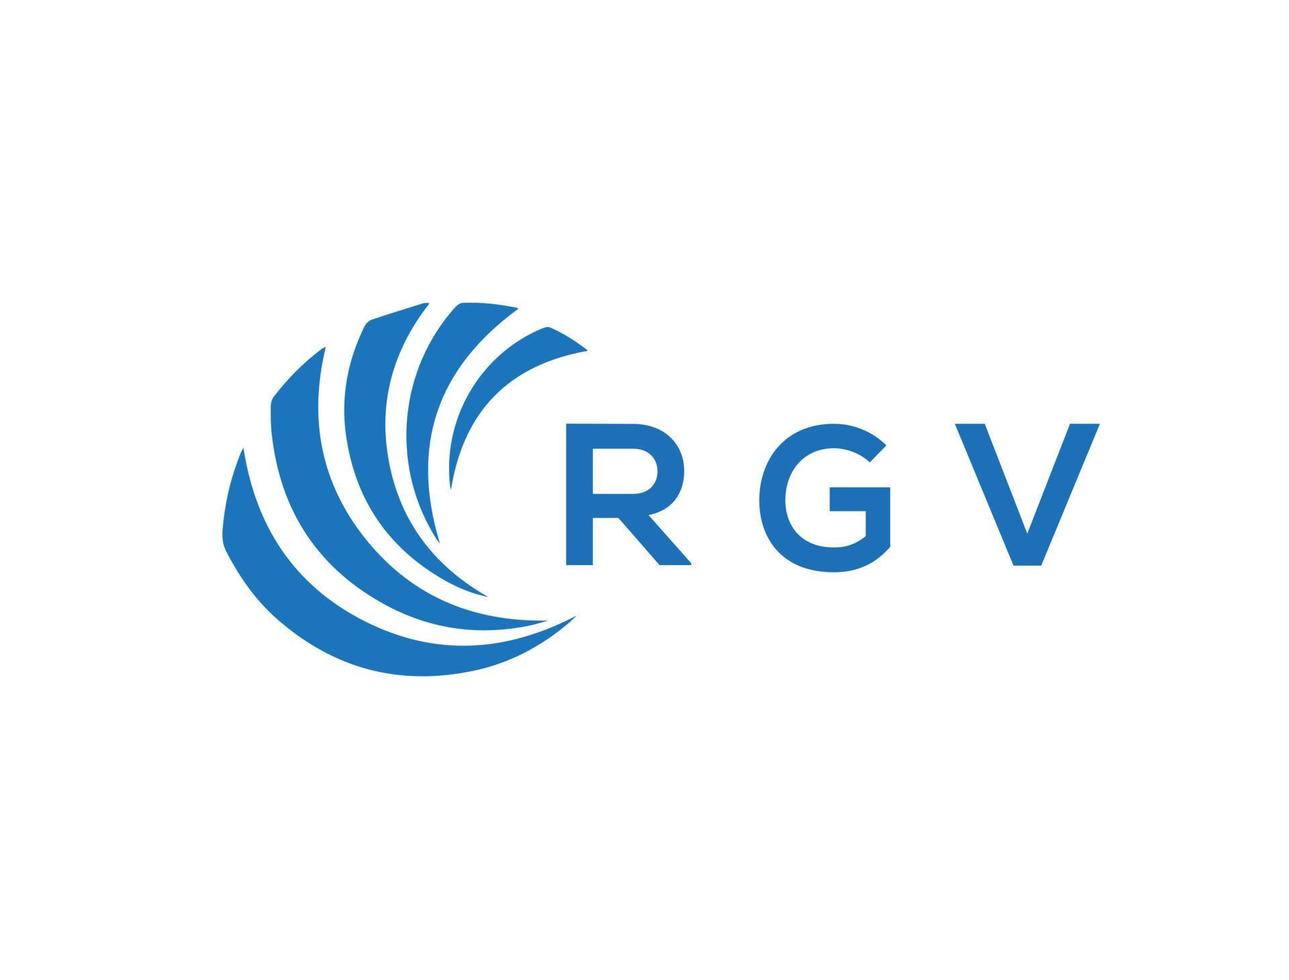 rgv lettera logo design su bianca sfondo. rgv creativo cerchio lettera logo concetto. rgv lettera design. vettore